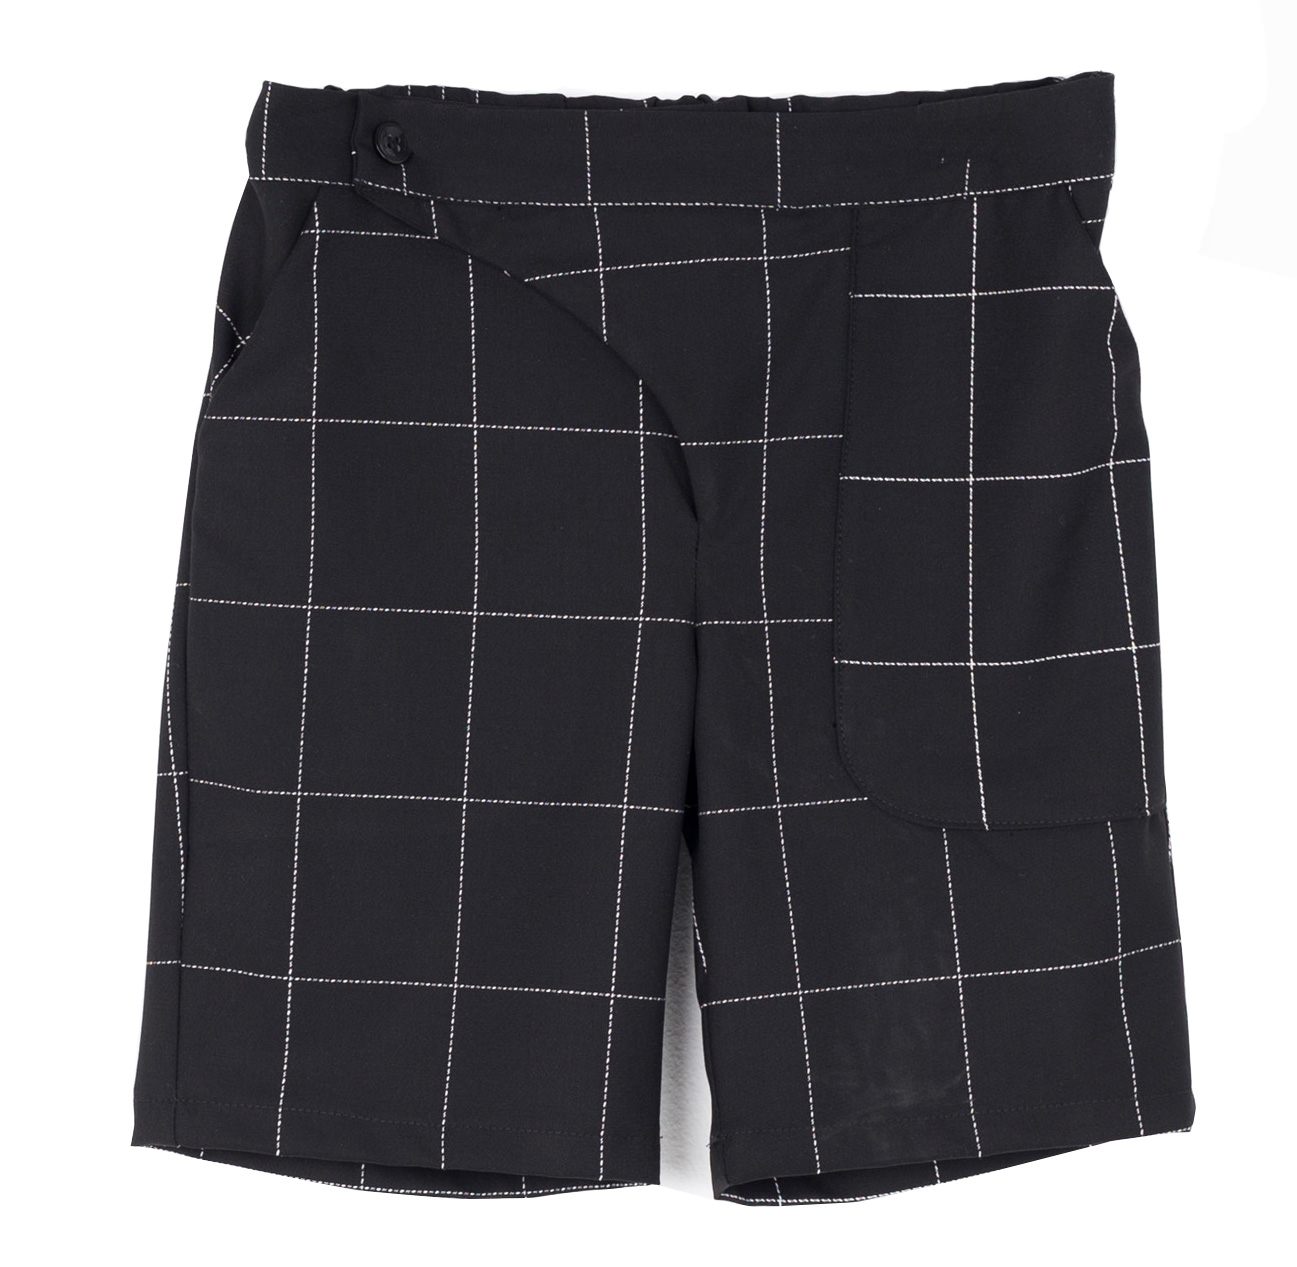             Pocket Pants - Grid